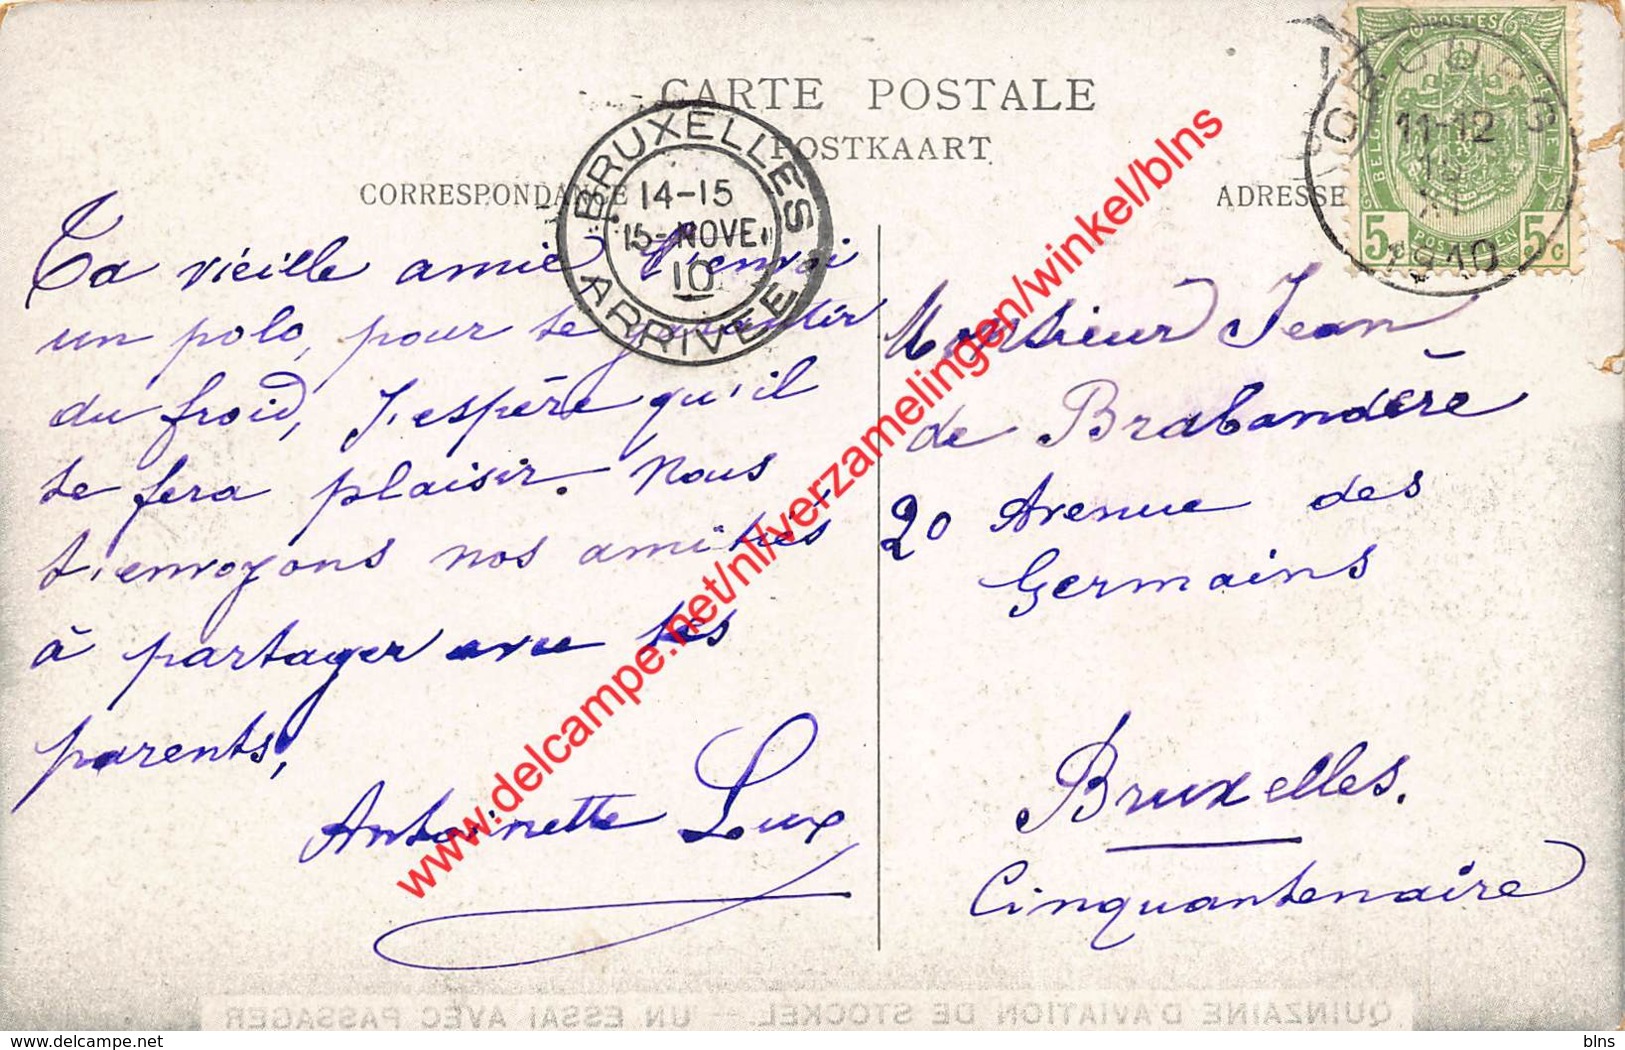 1910 - Quinzaine D'aviation De Stockel - Un Essai Avec Passager - St-Pieters-Woluwe - Woluwe-St-Pierre